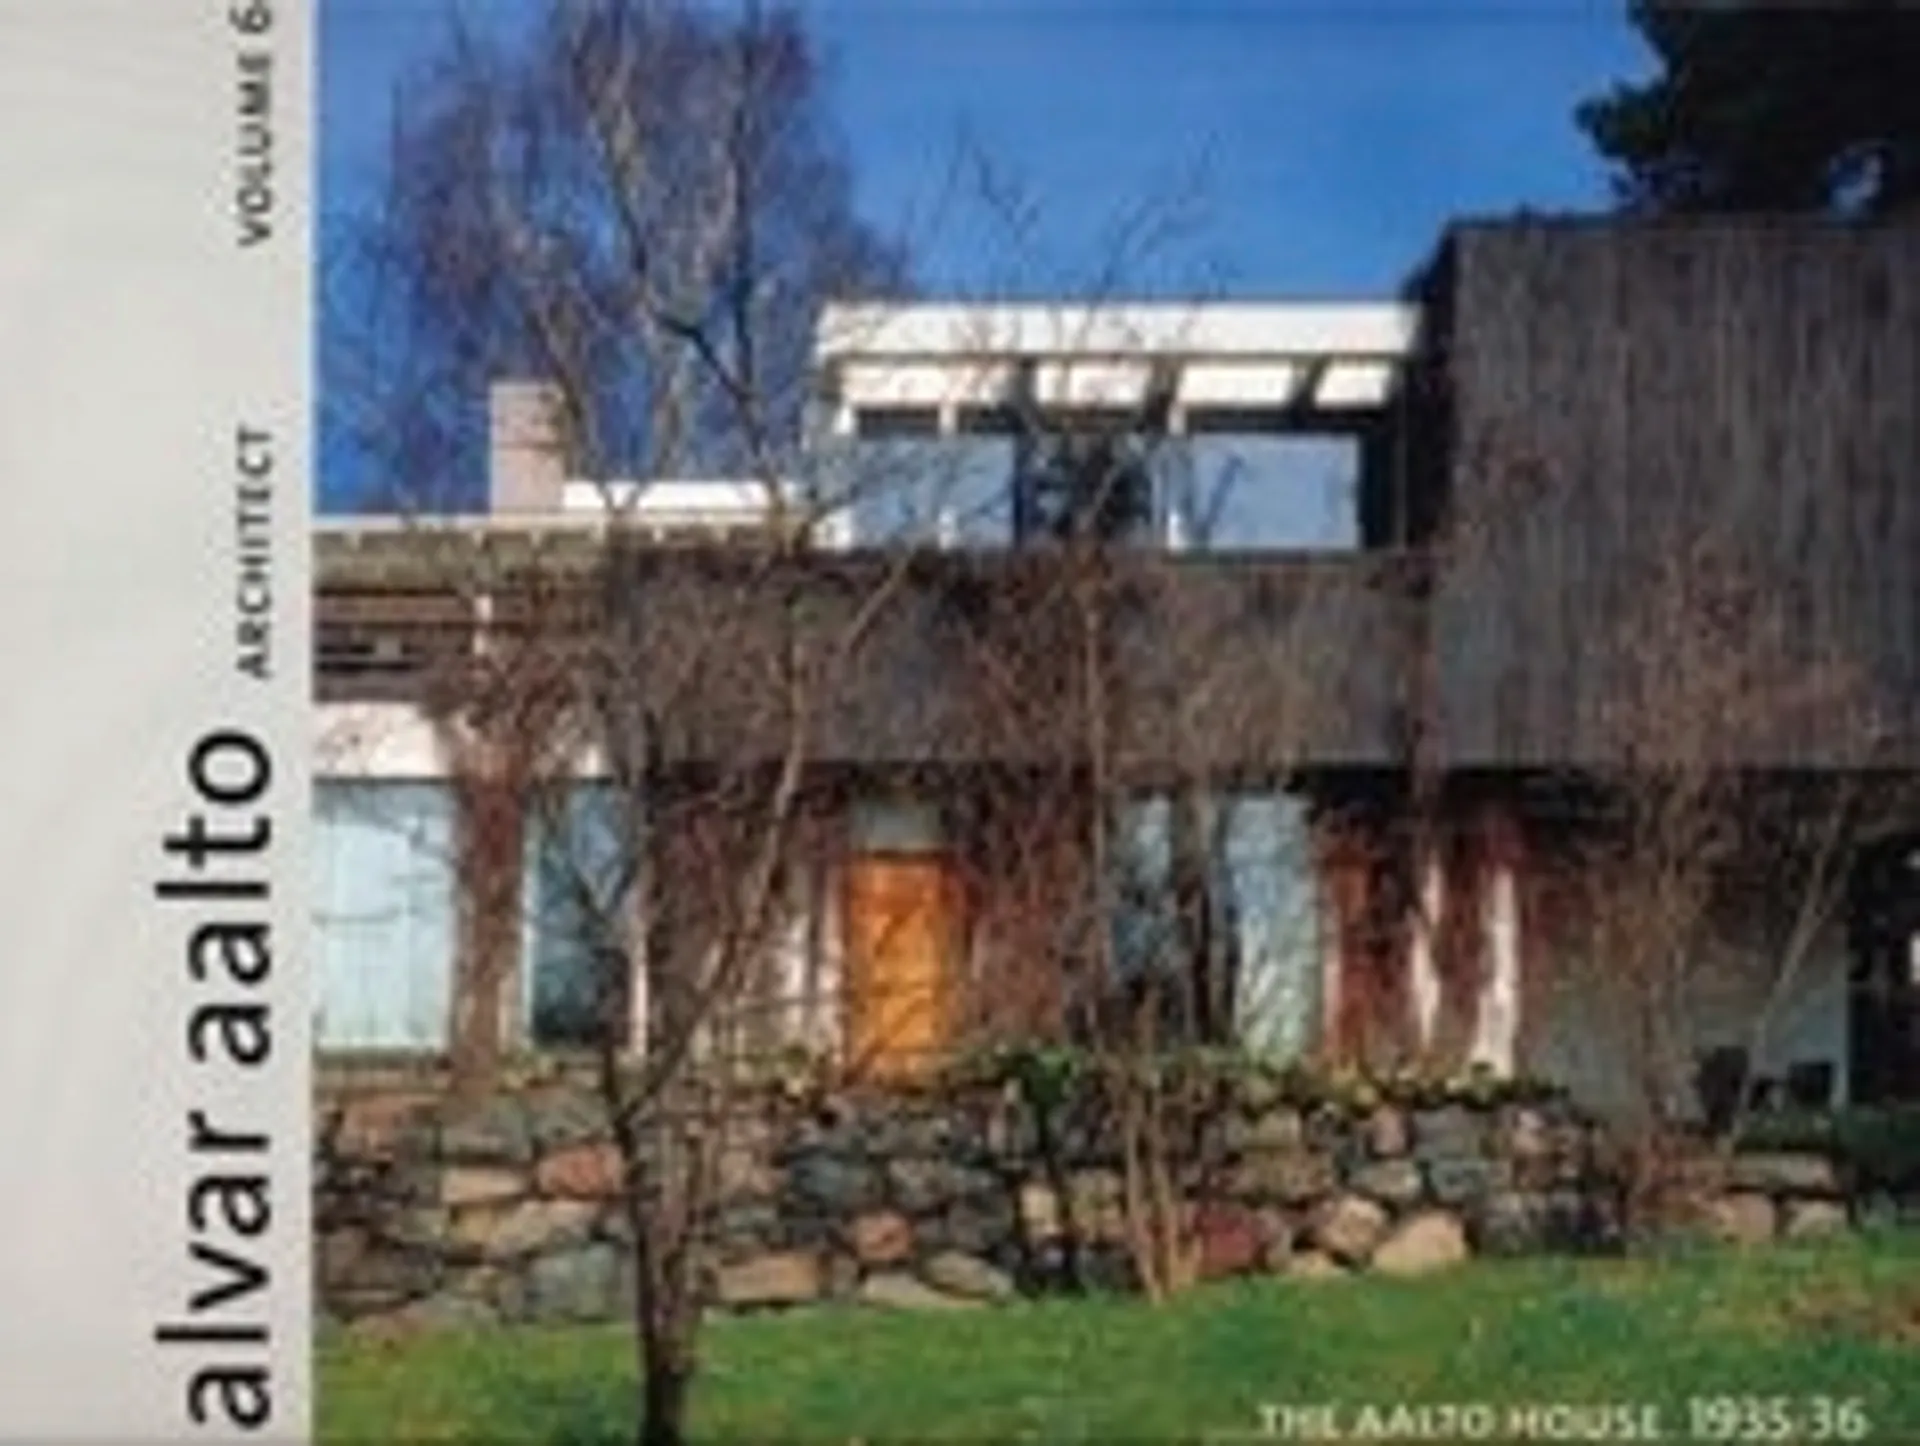 Alvar Aalto architect